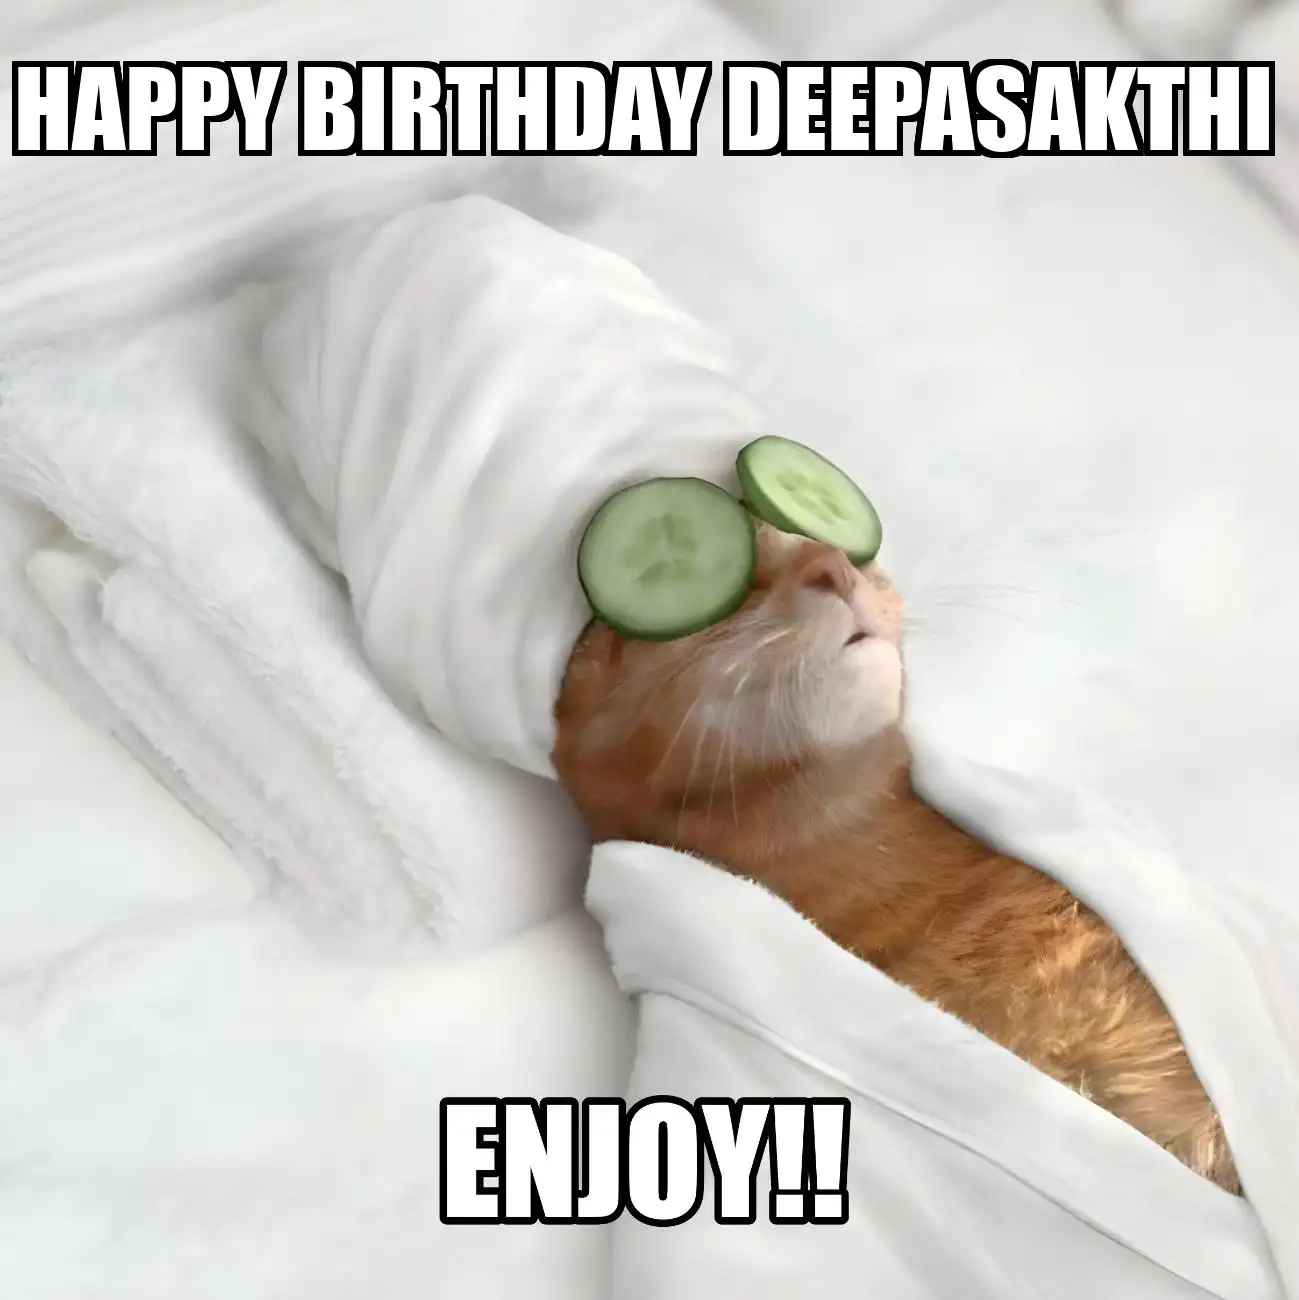 Happy Birthday Deepasakthi Enjoy Cat Meme